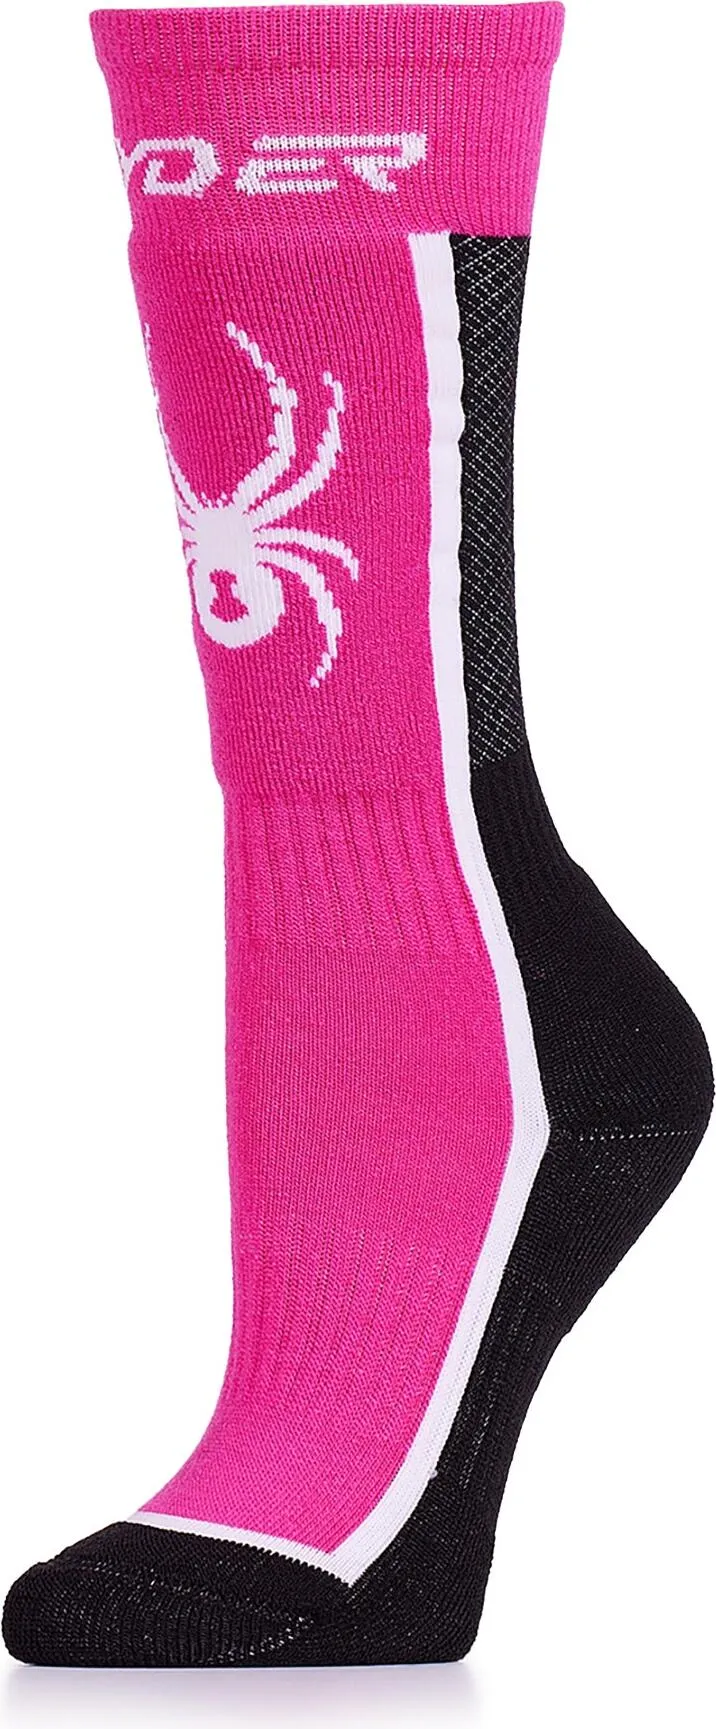 Spyder Youth Sweep Ski Socks Socks pink (PNK) M